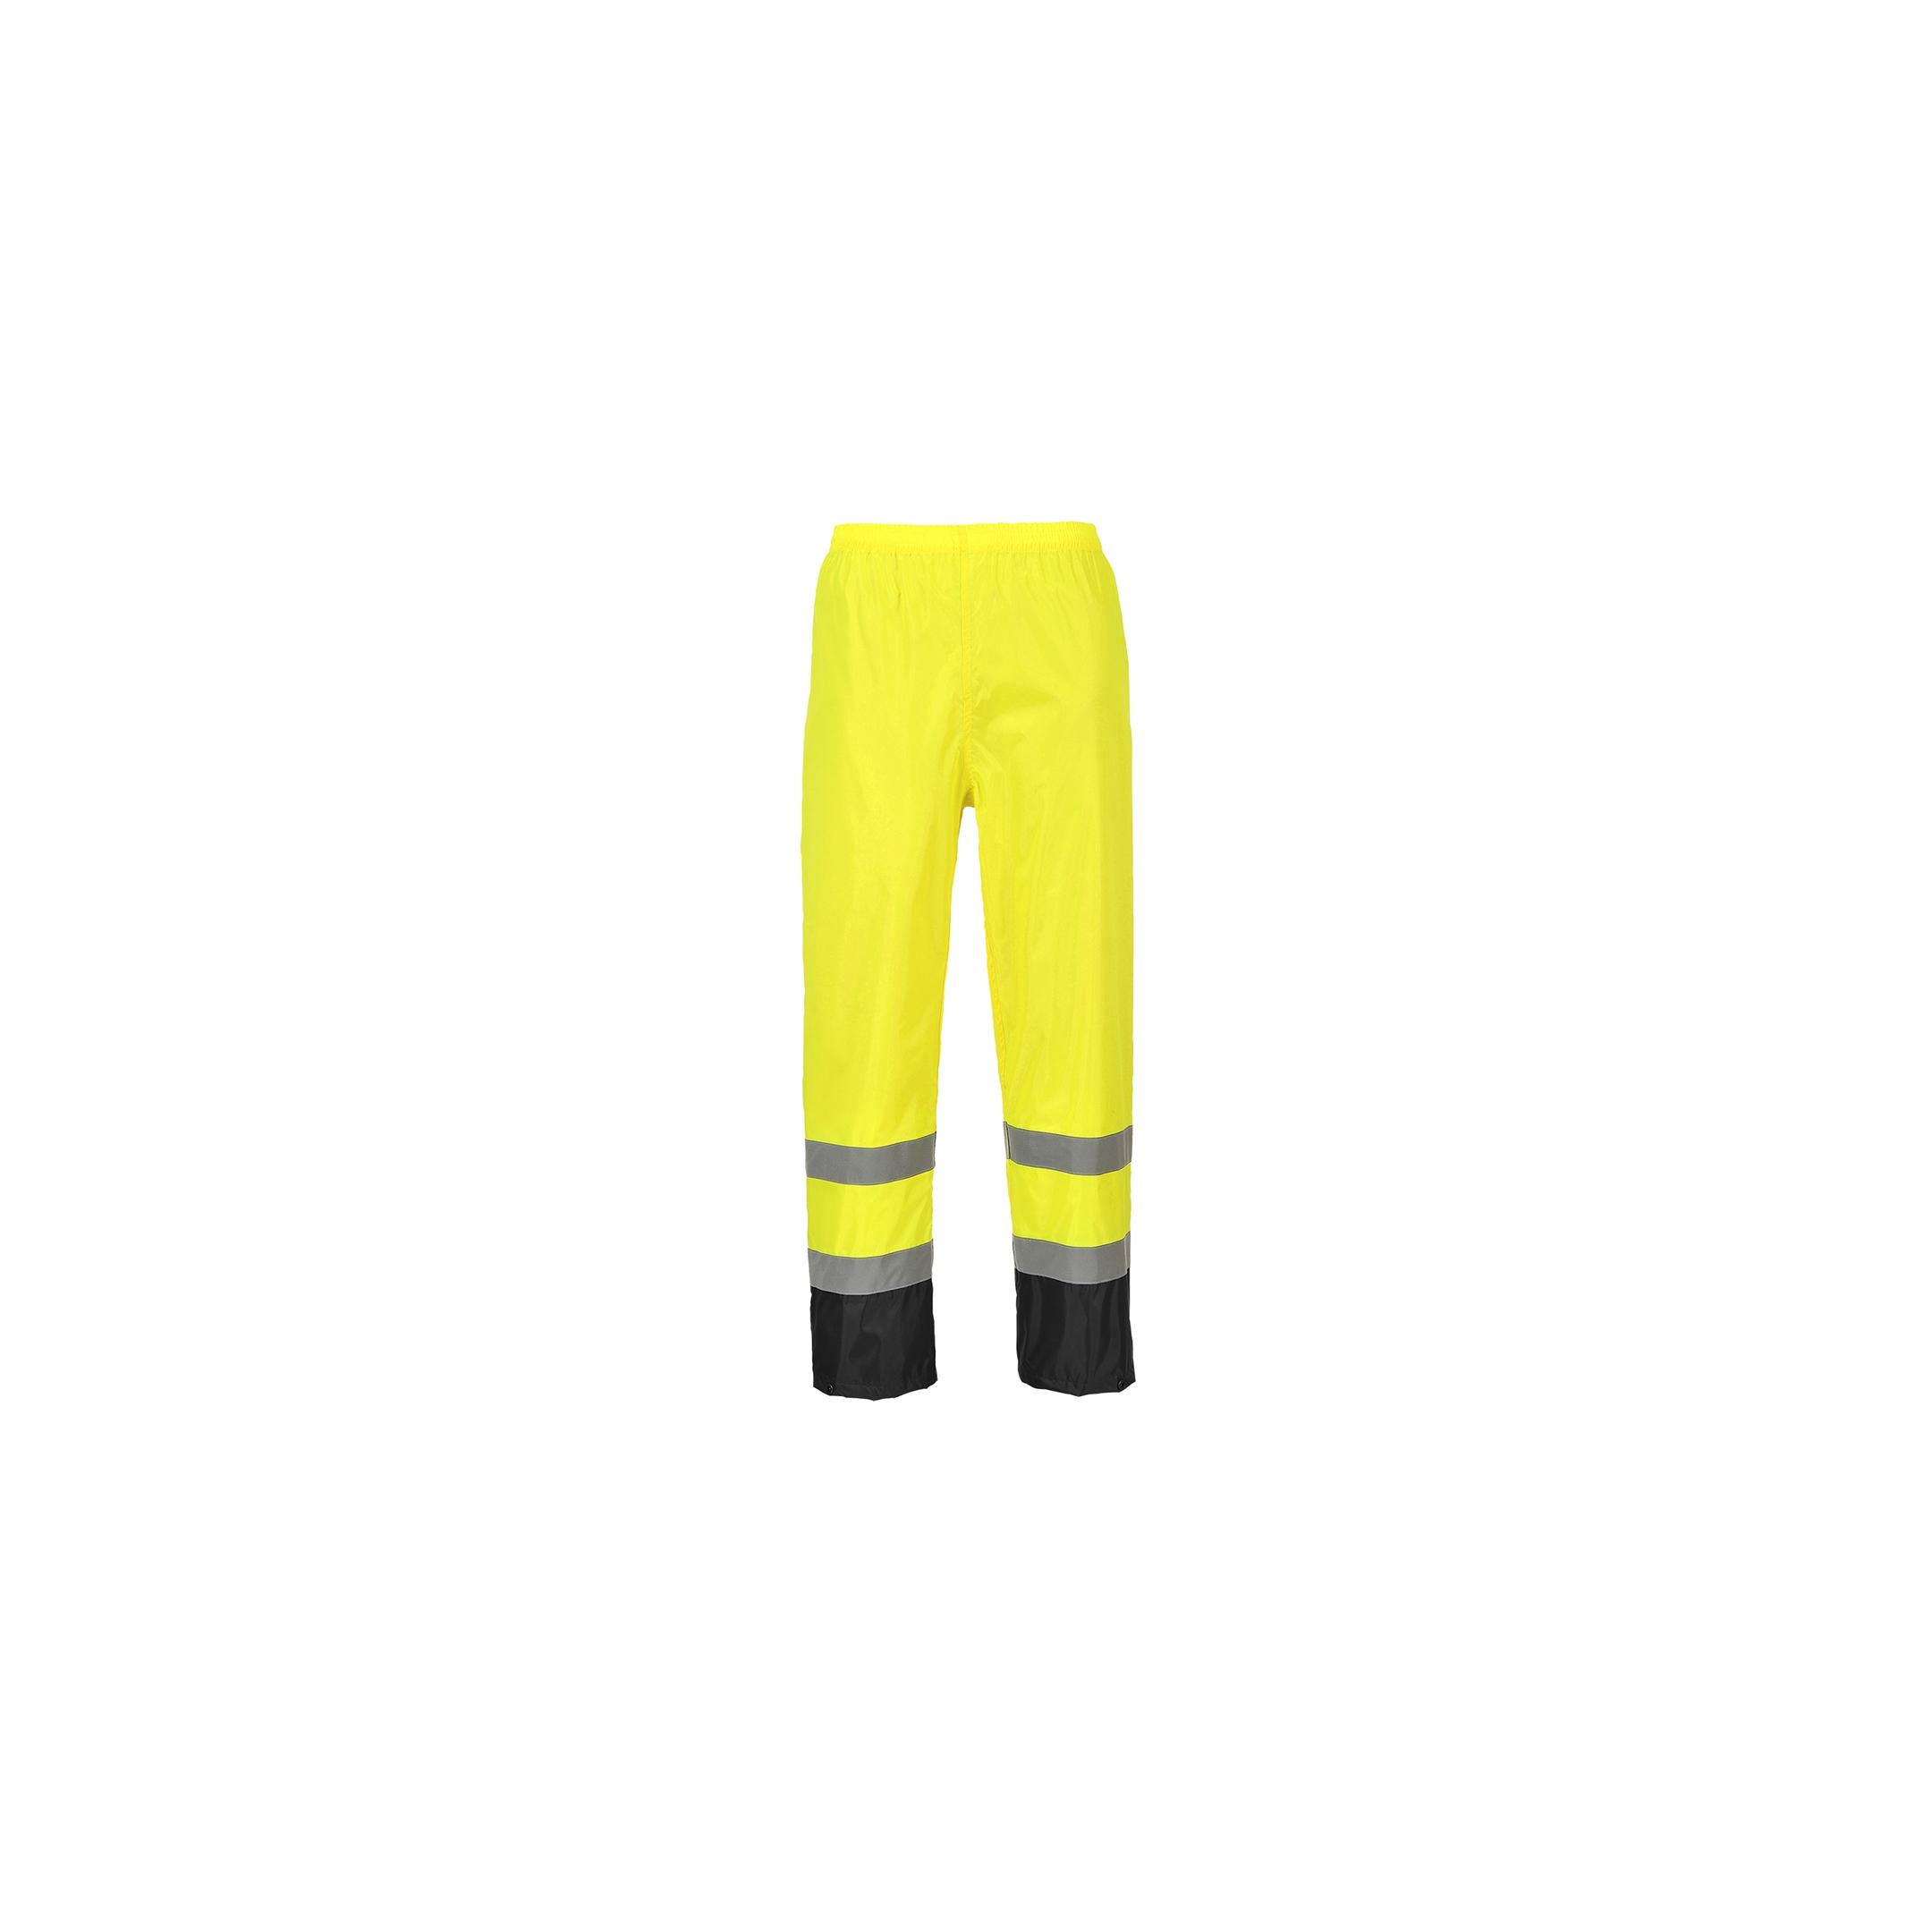 Pantalone Classic Bicolore H444 - Impermeabile Hi-Vis Portwest  - Portwest - Pantaloni da lavoro